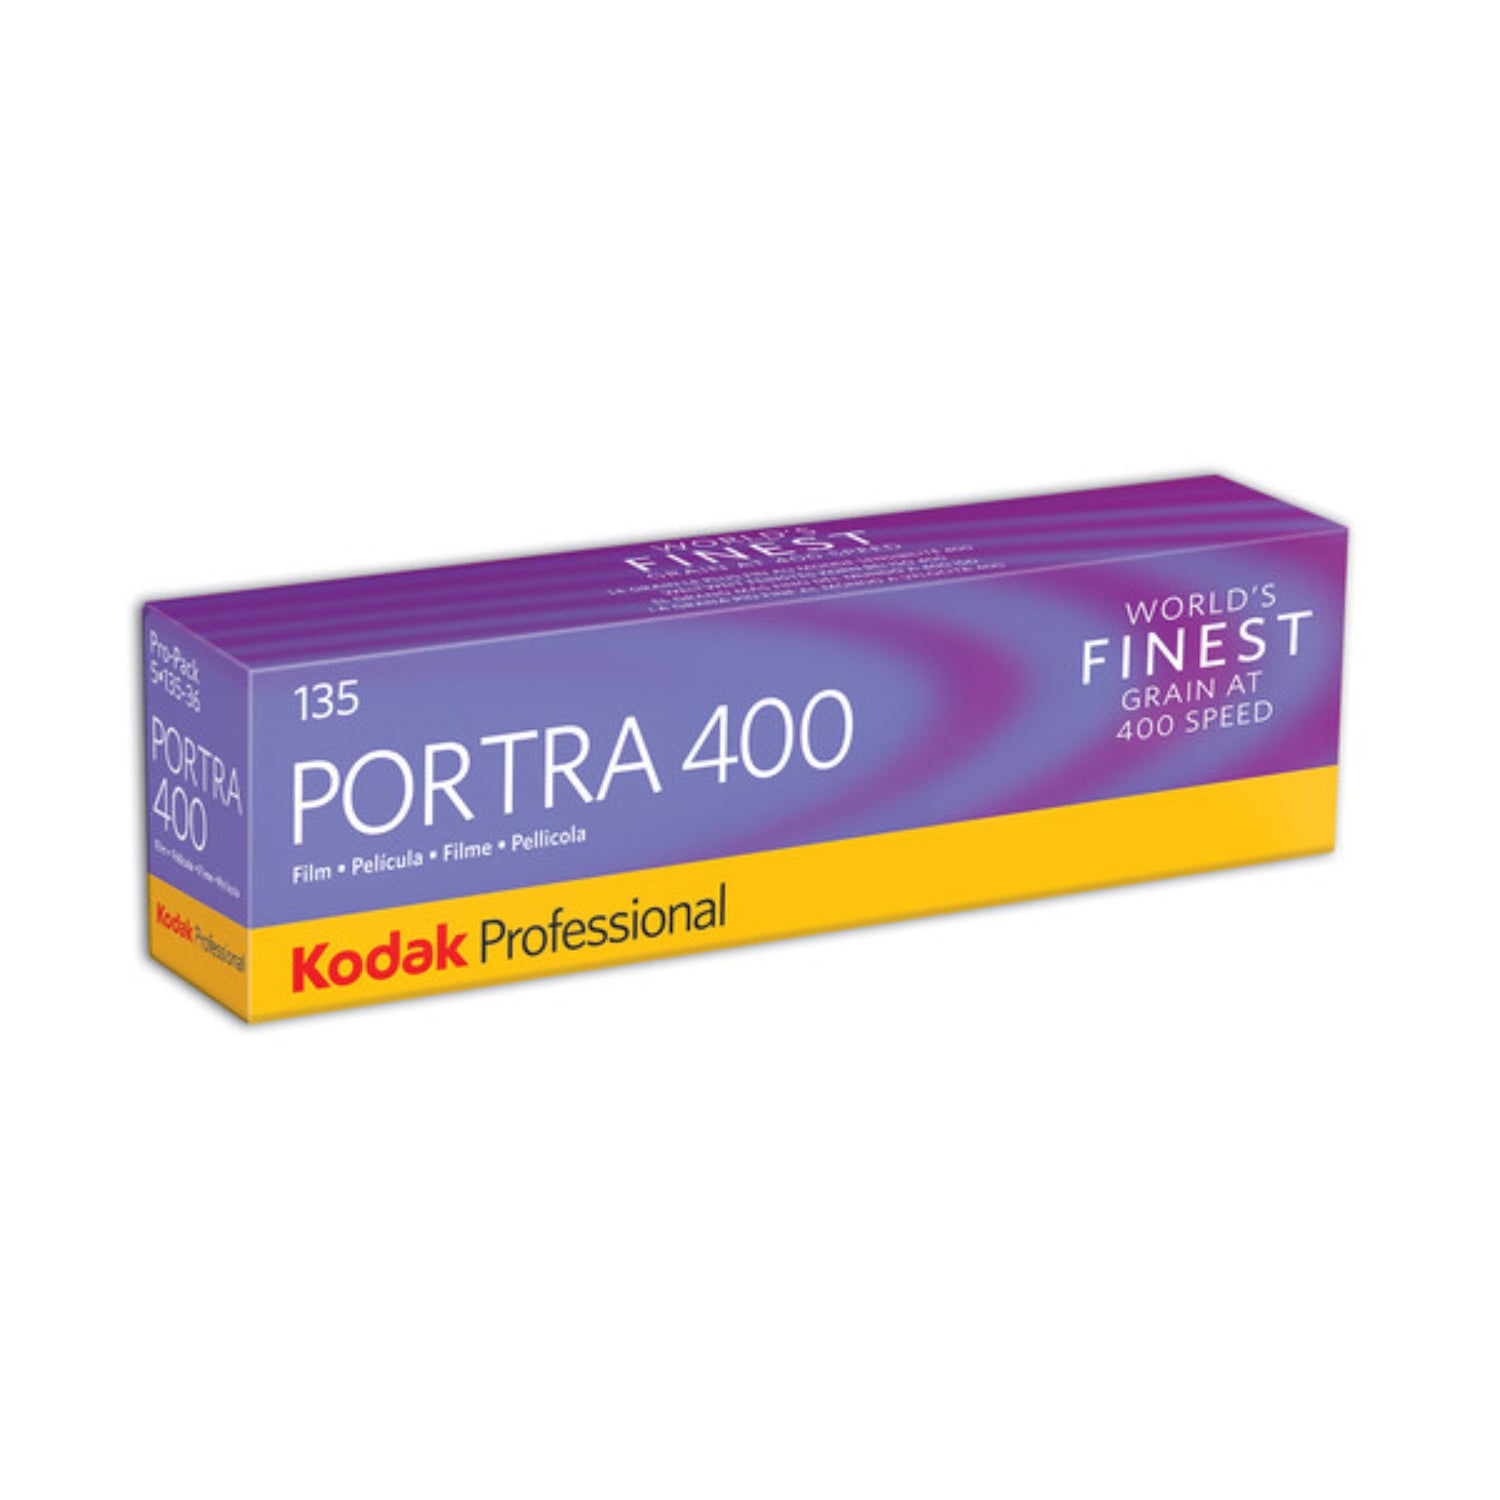 Buy Kodak Portra 400 iso 135-36 5 Pack at Topic Store